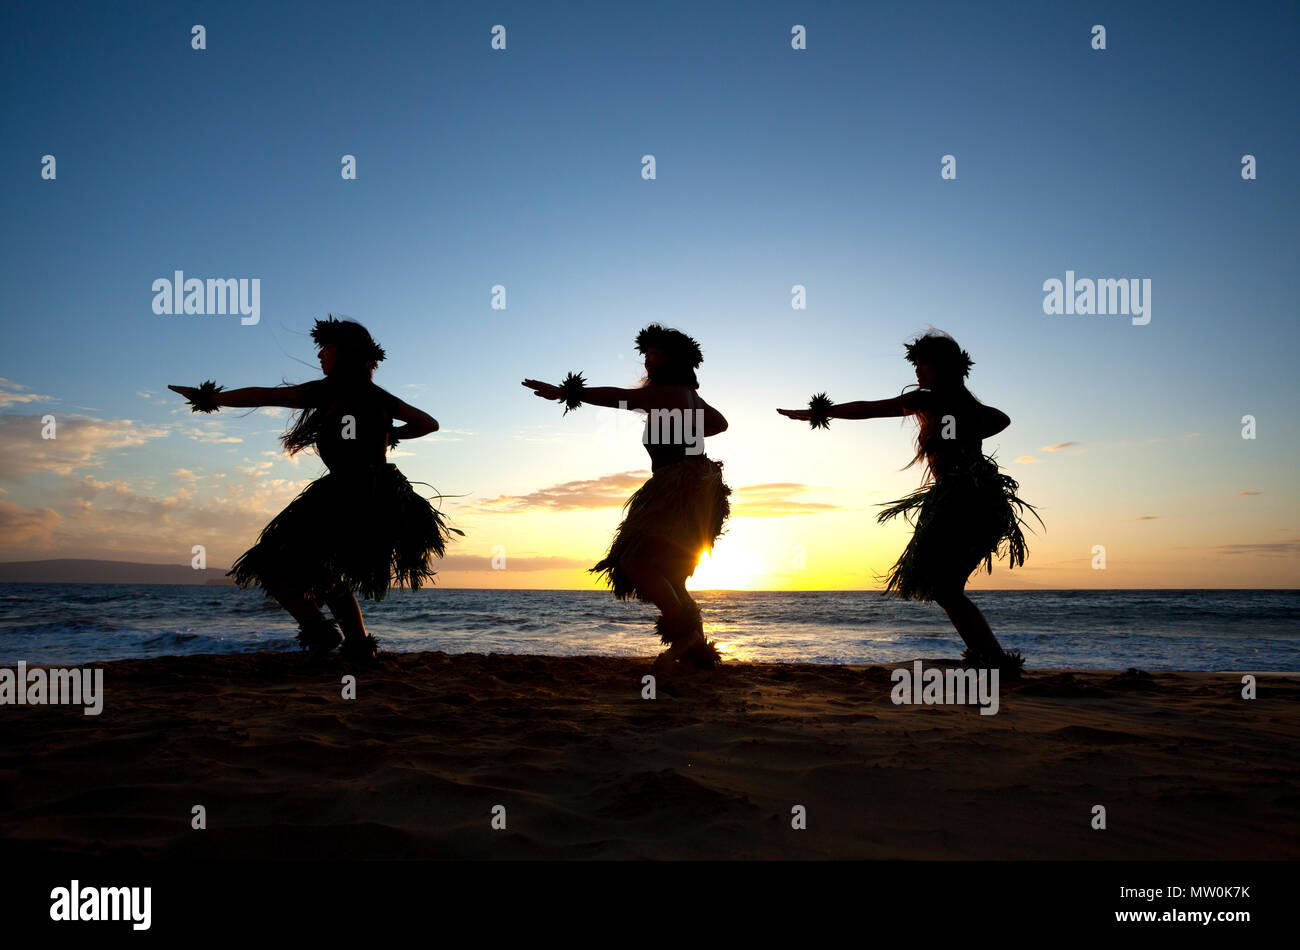 Three hula dancers at sunset at Wailea, Maui, Hawaii. Stock Photo